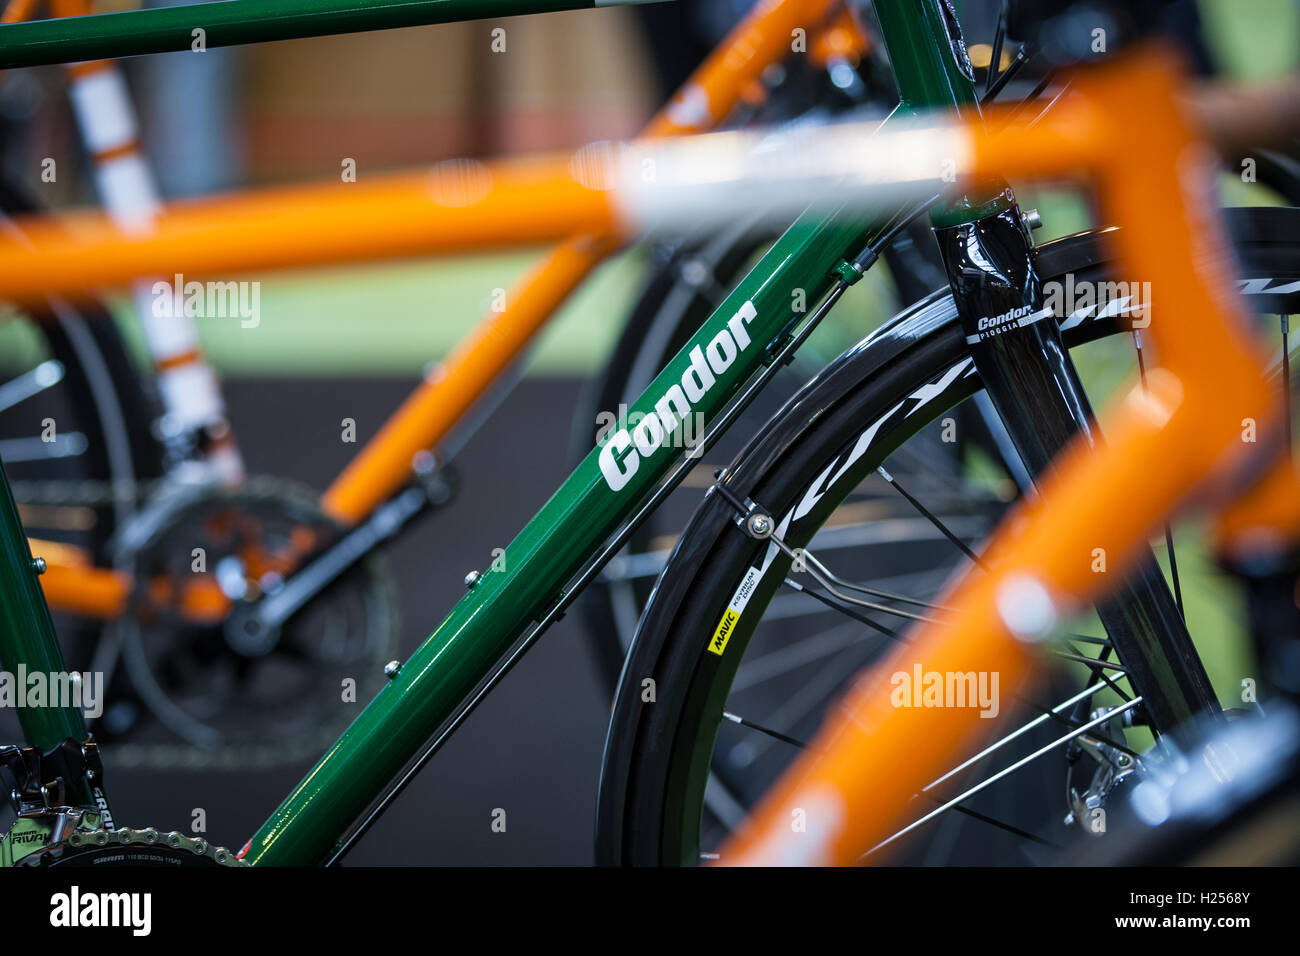 Kondor fahrrad -Fotos und -Bildmaterial in hoher Auflösung – Alamy